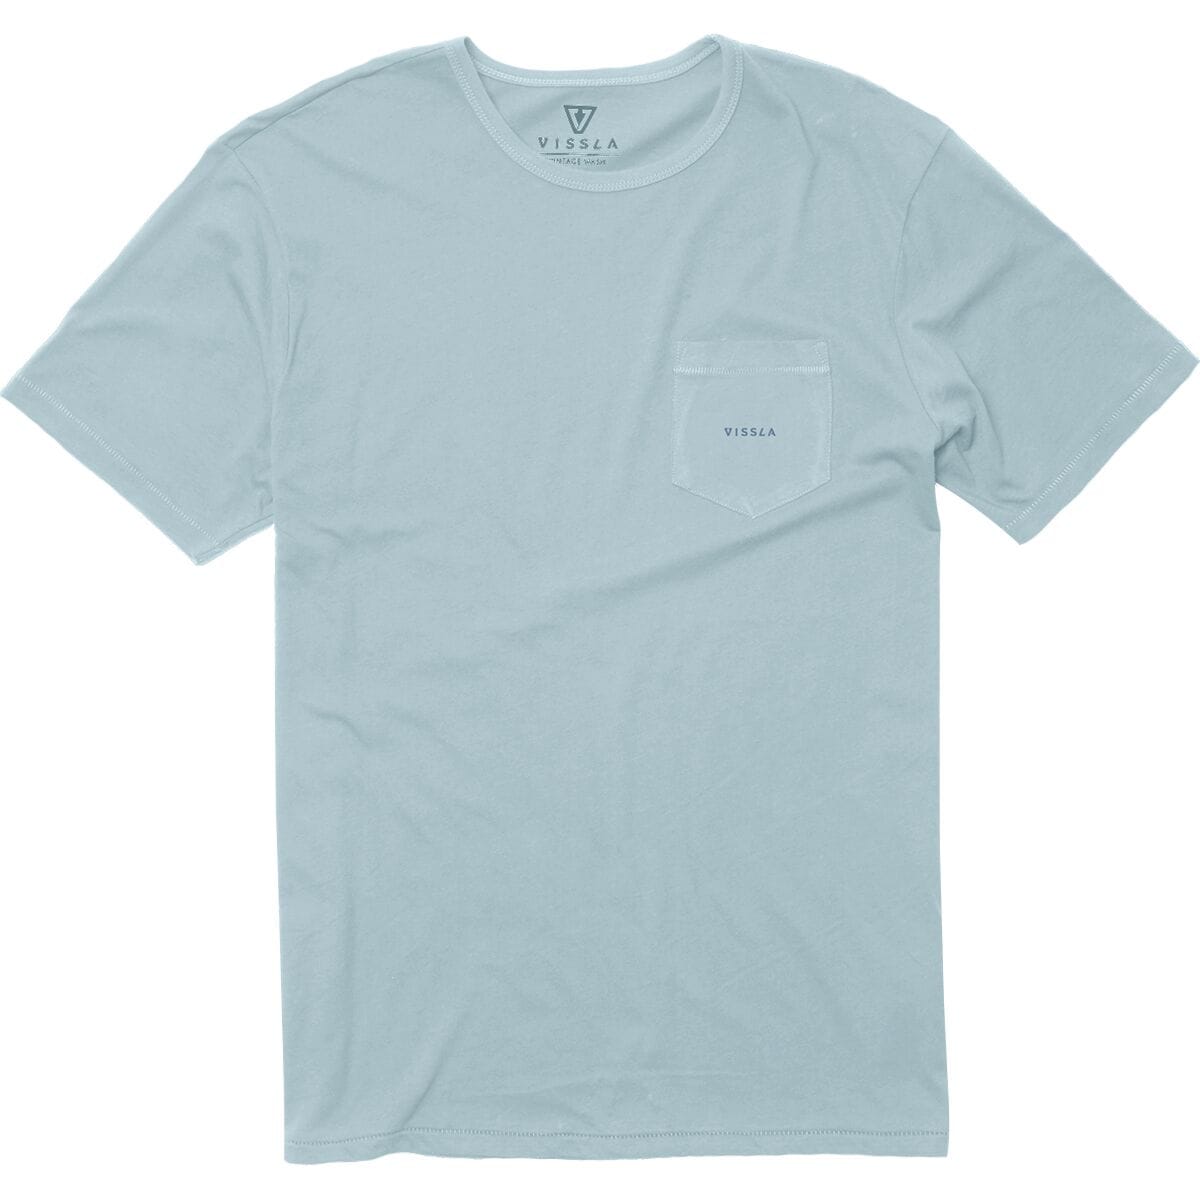 Vintage Vissla Organic Pocket T-Shirt - Men